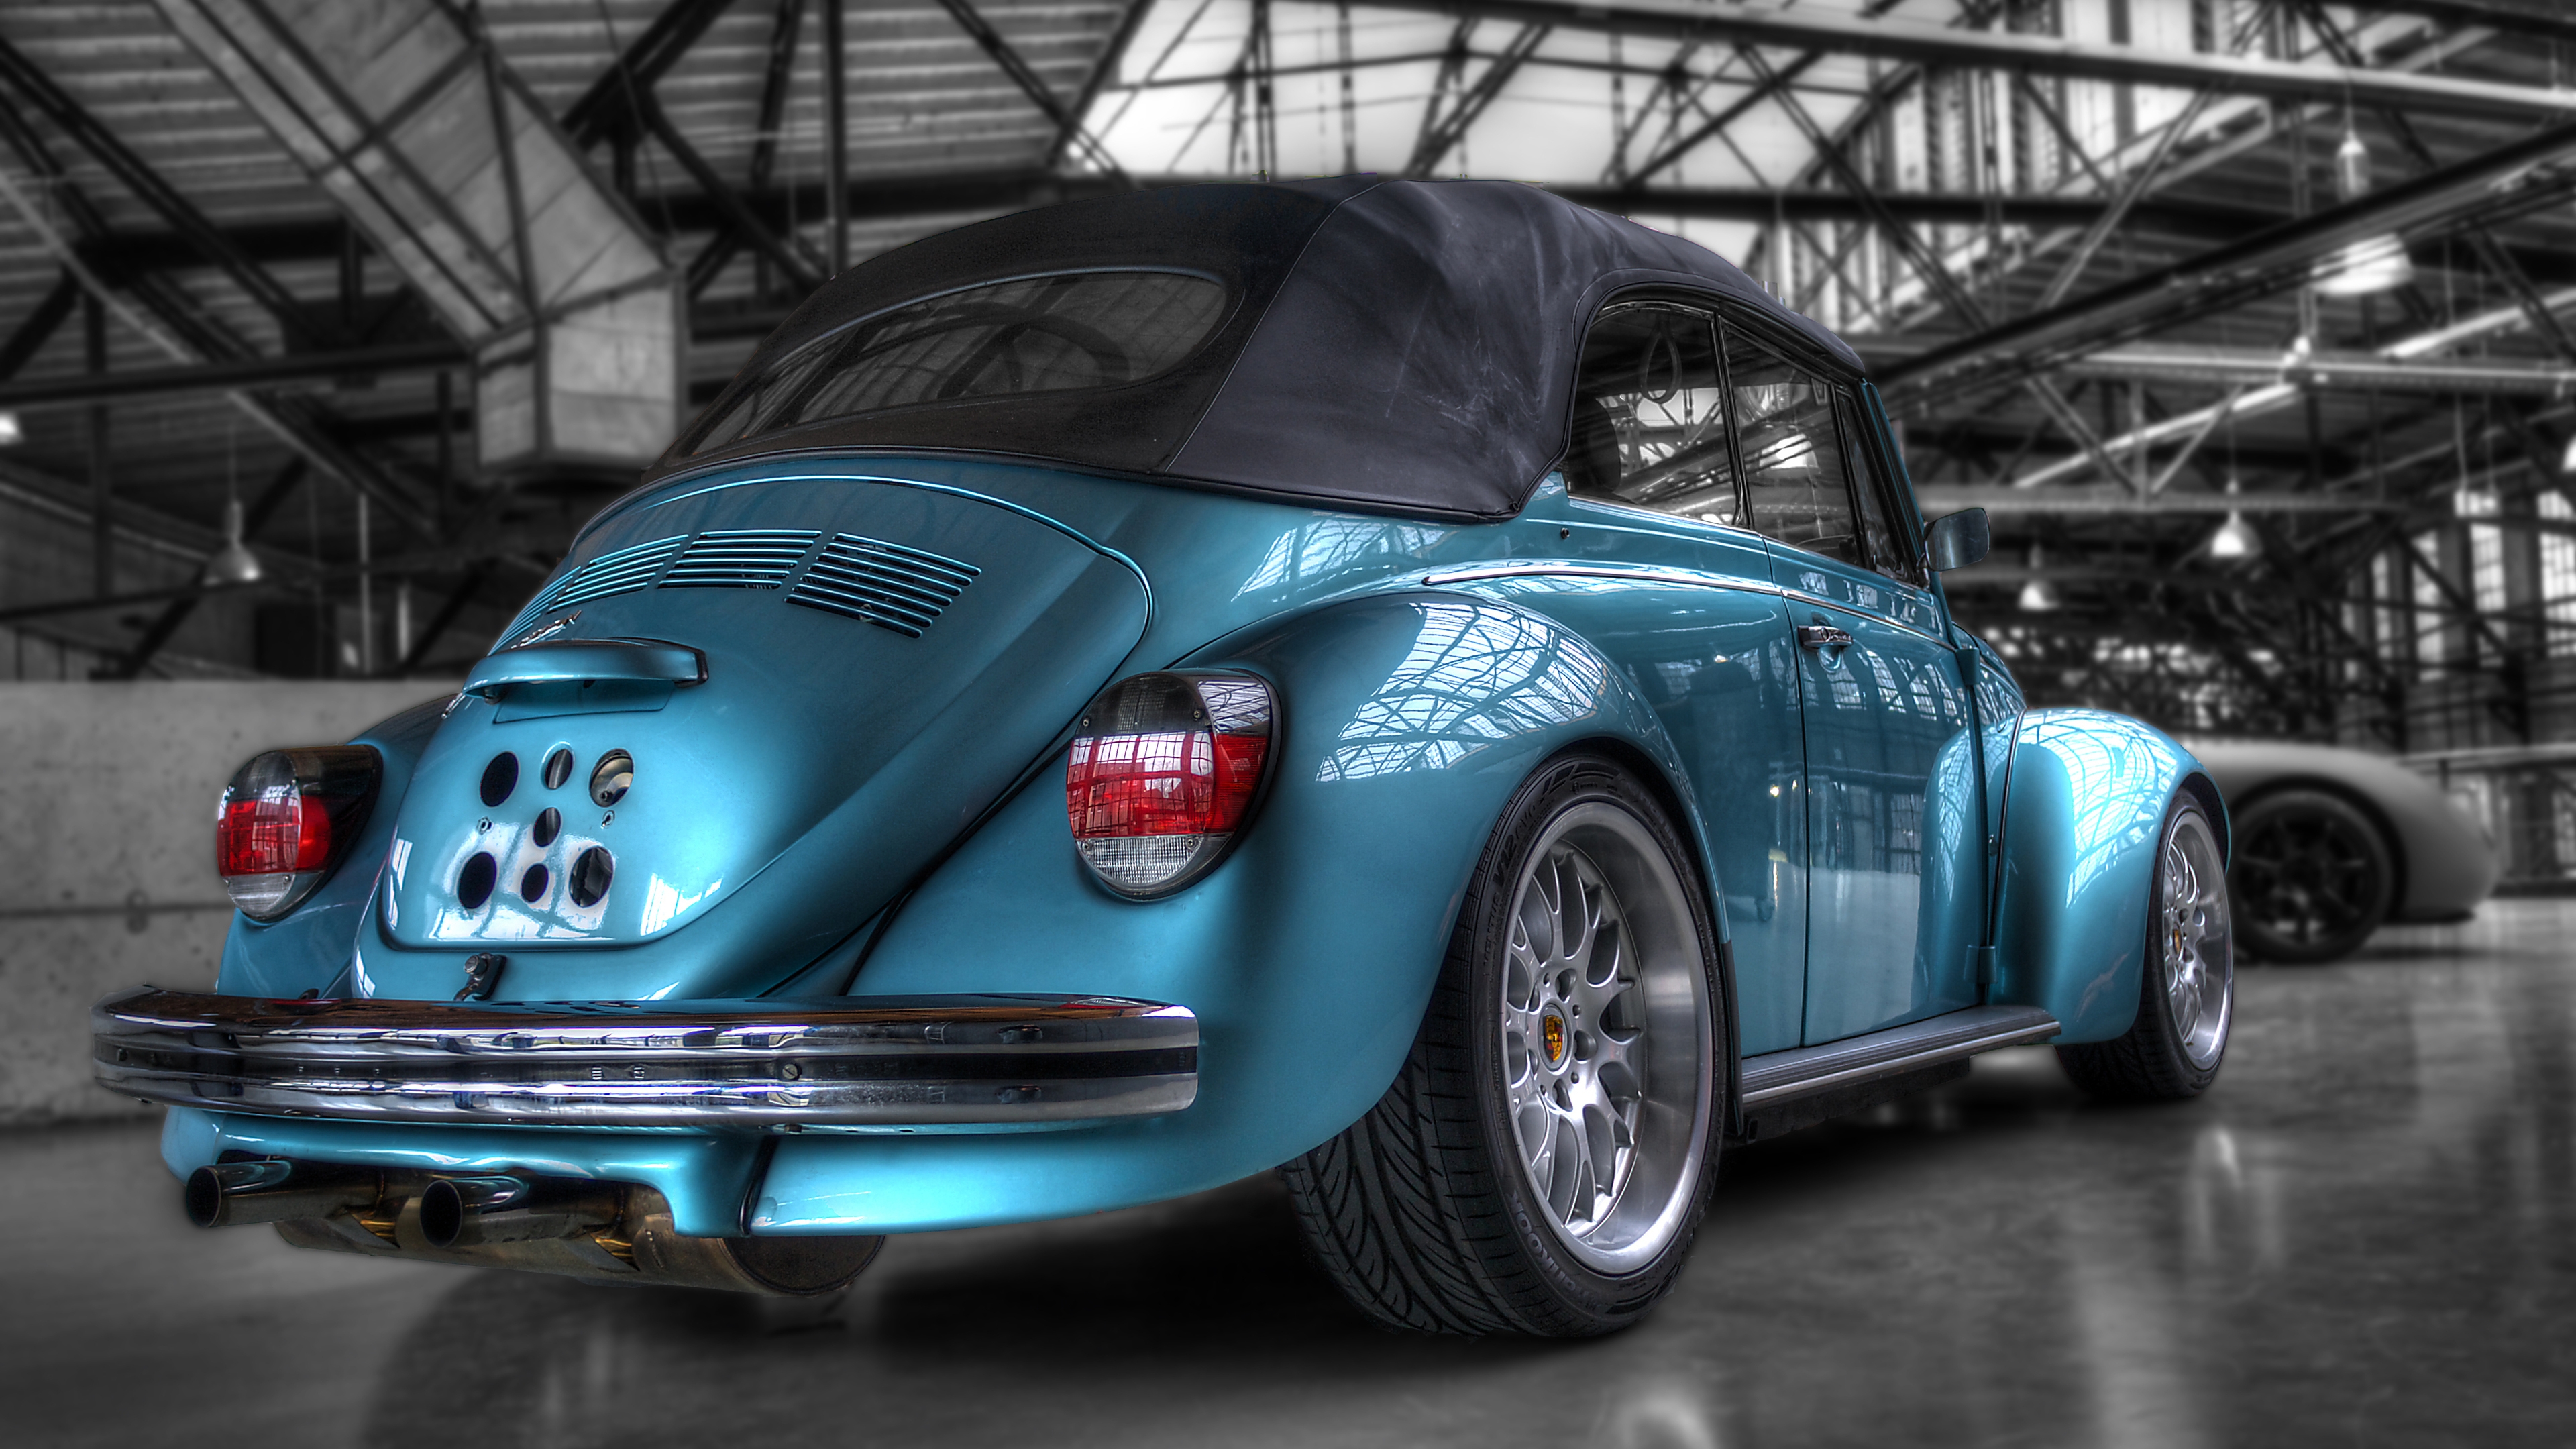 Volkswagen Super Beetle for 3840 x 2160 Ultra HD resolution